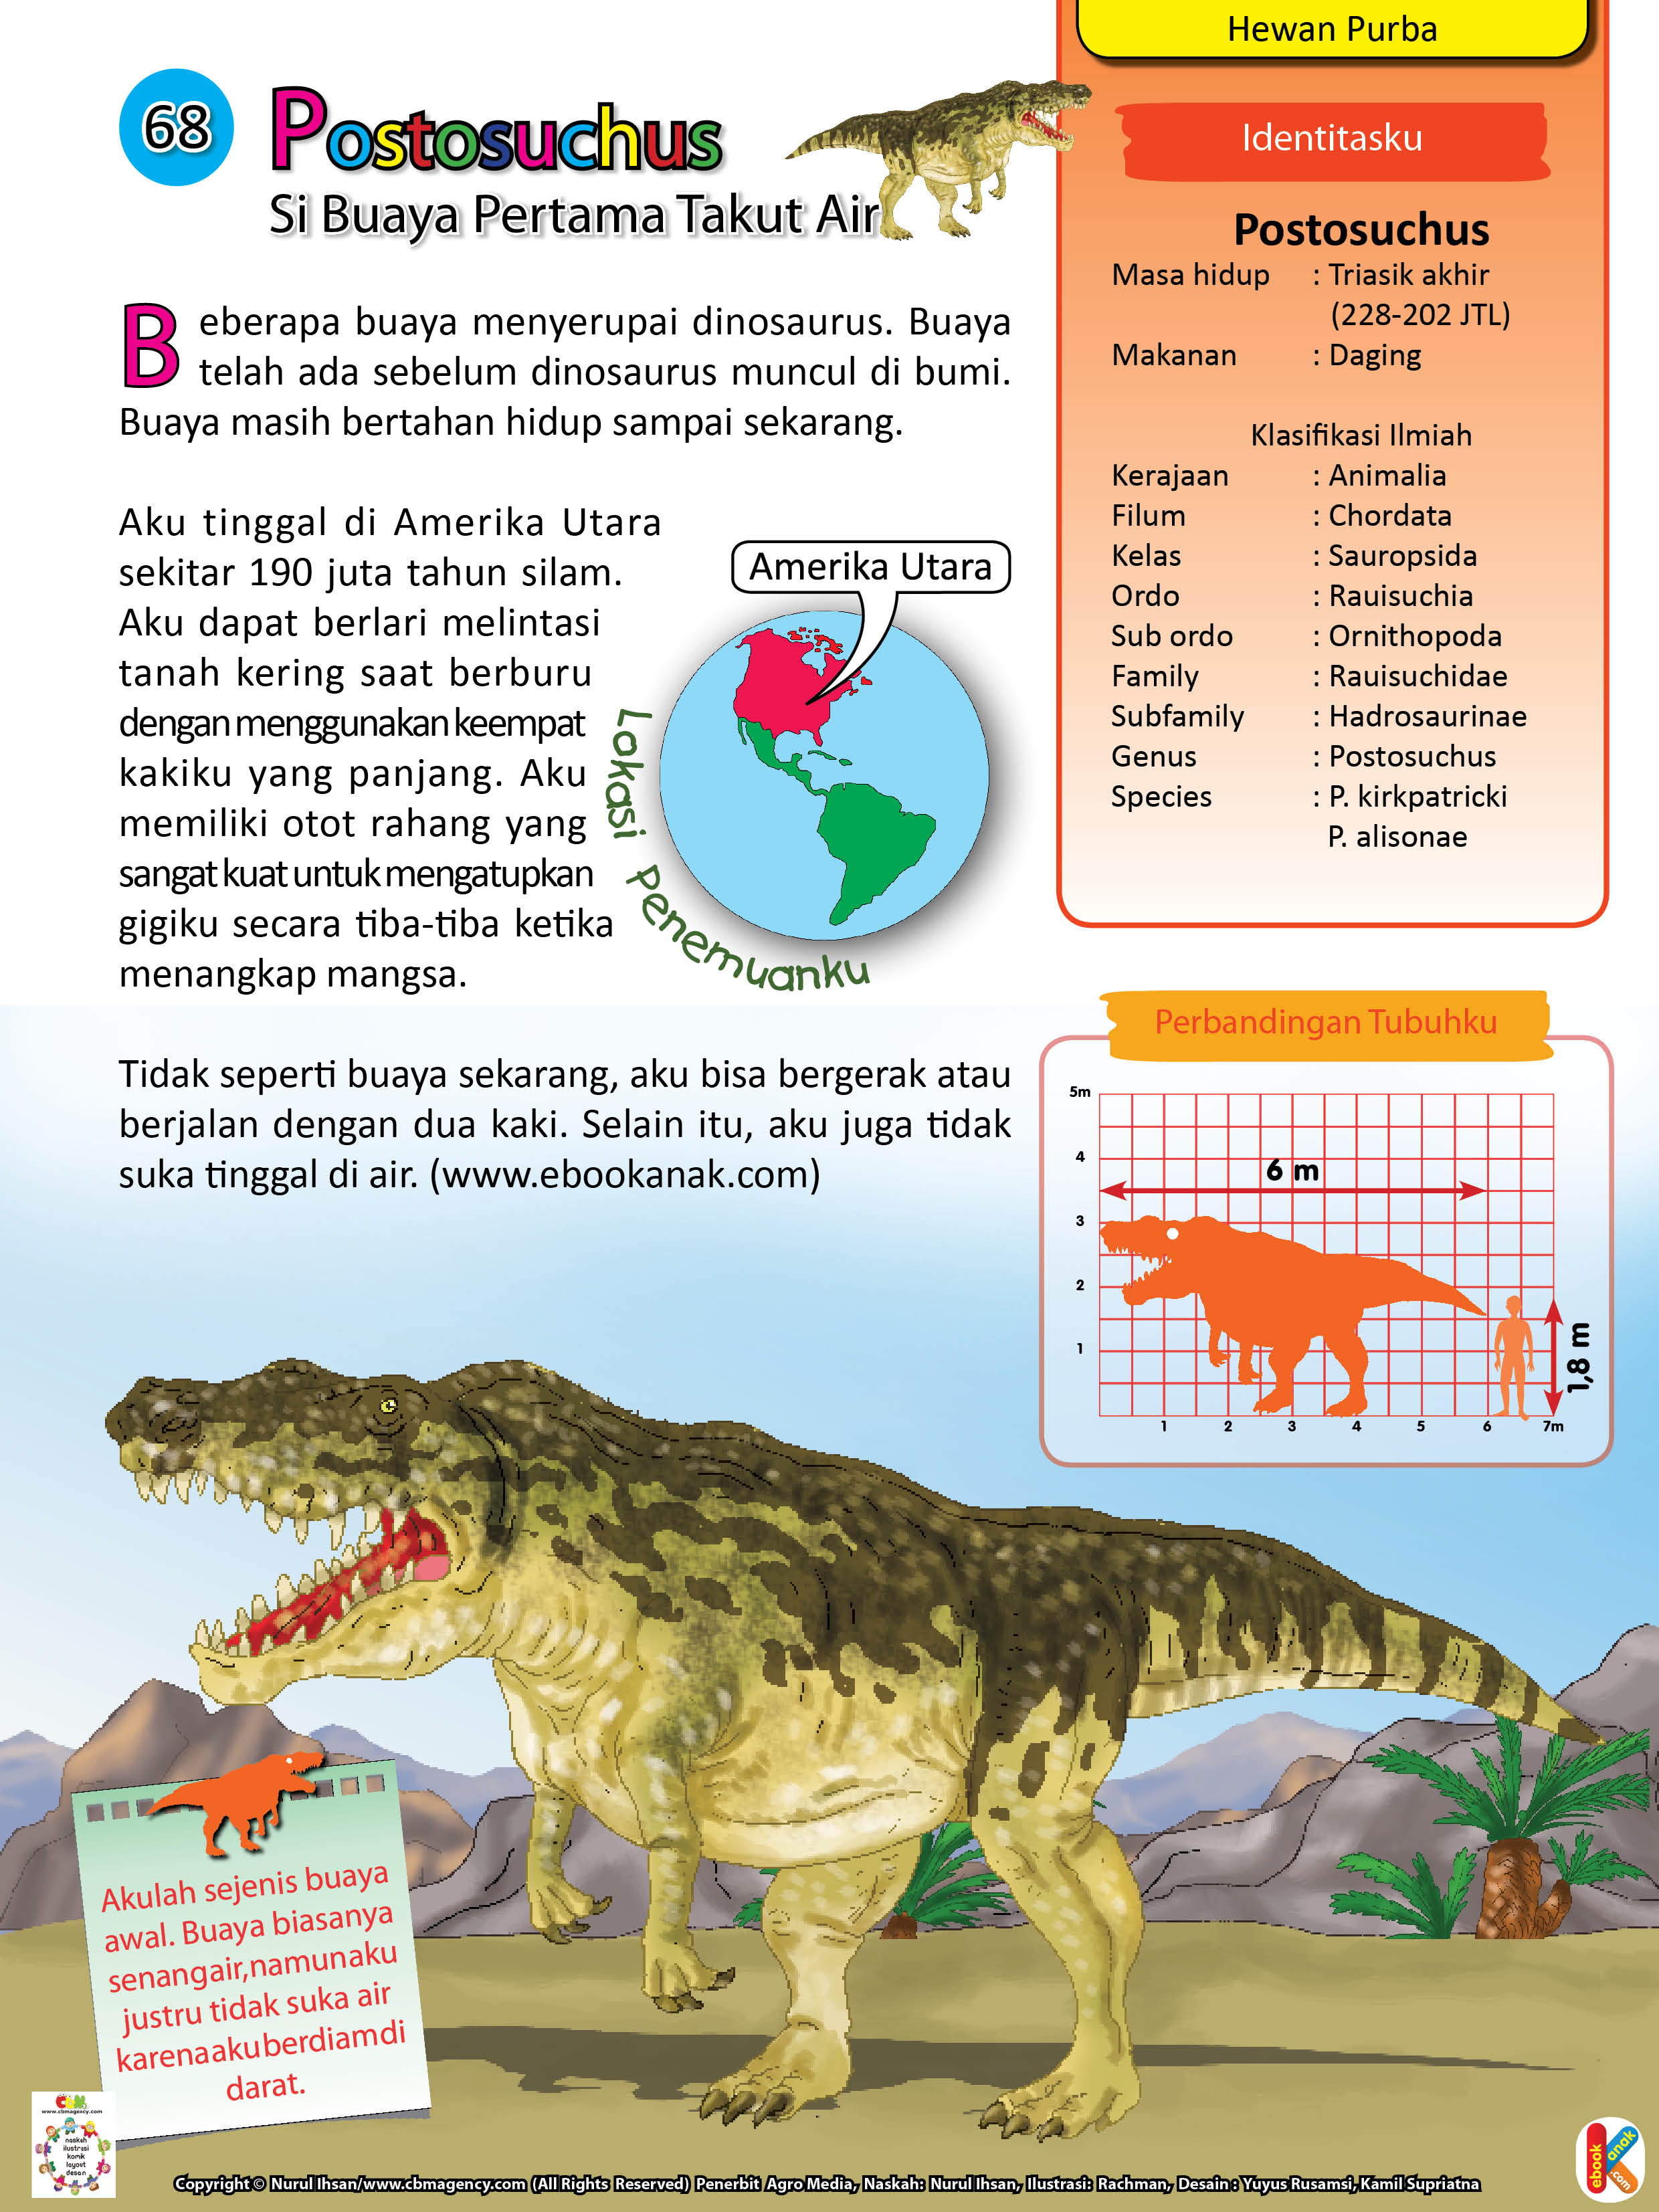 Dinosaurus Hewan Purba Postosuchusjpg 75 Ebook Anak